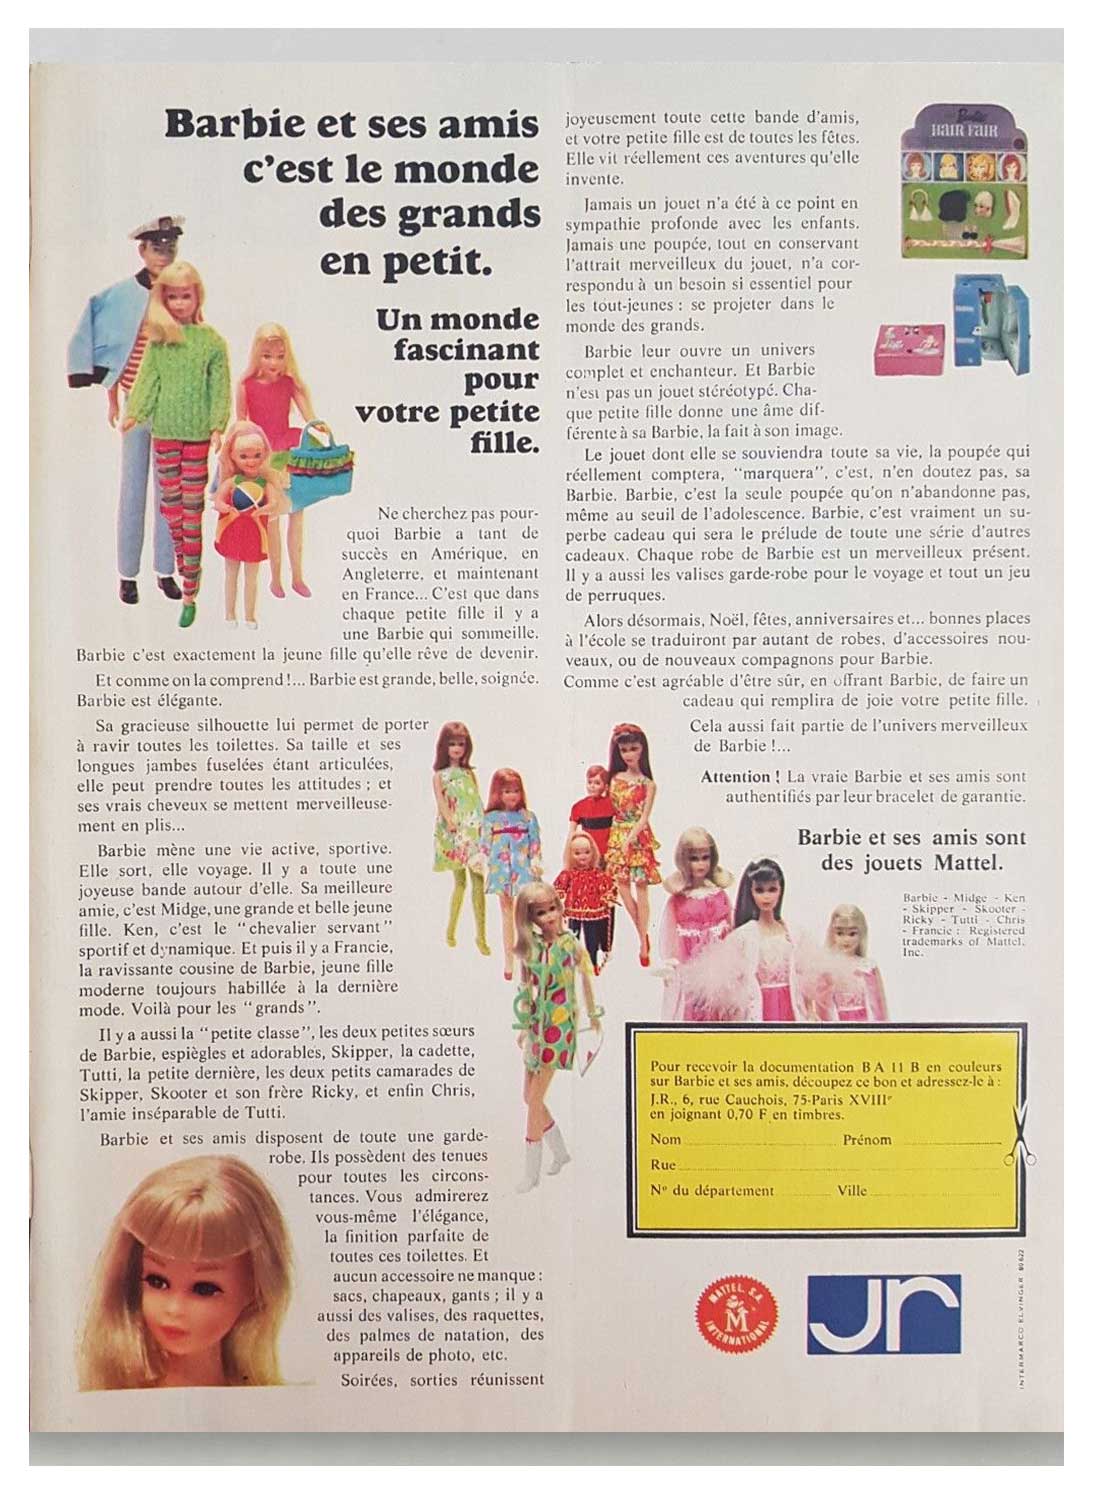 1968 French Femmes d'Aujourdhui magazine (19 June)